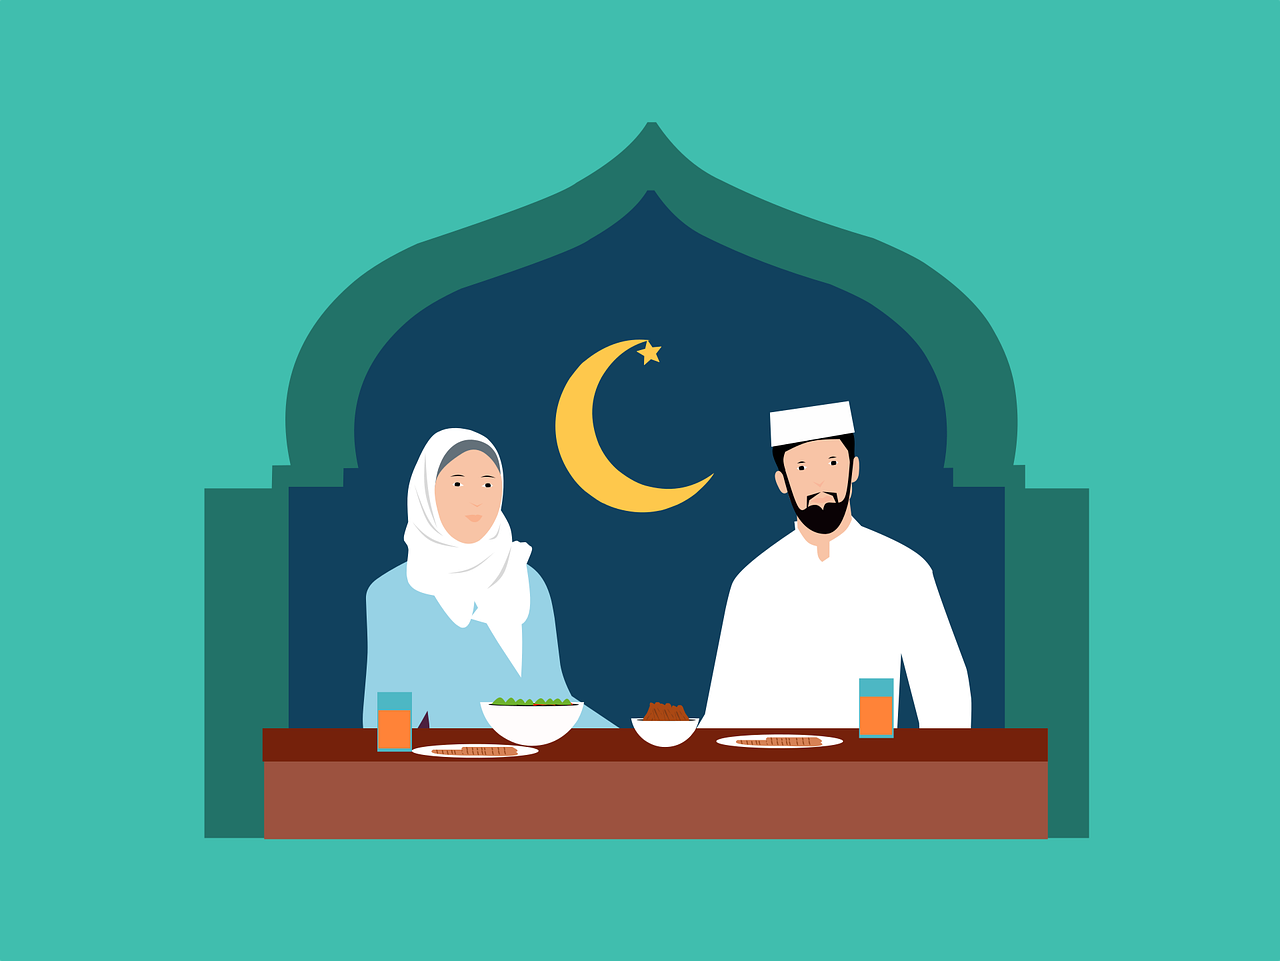 Simak arti bahasa gaul yang sedang populer selama bulan puasa Ramadhan